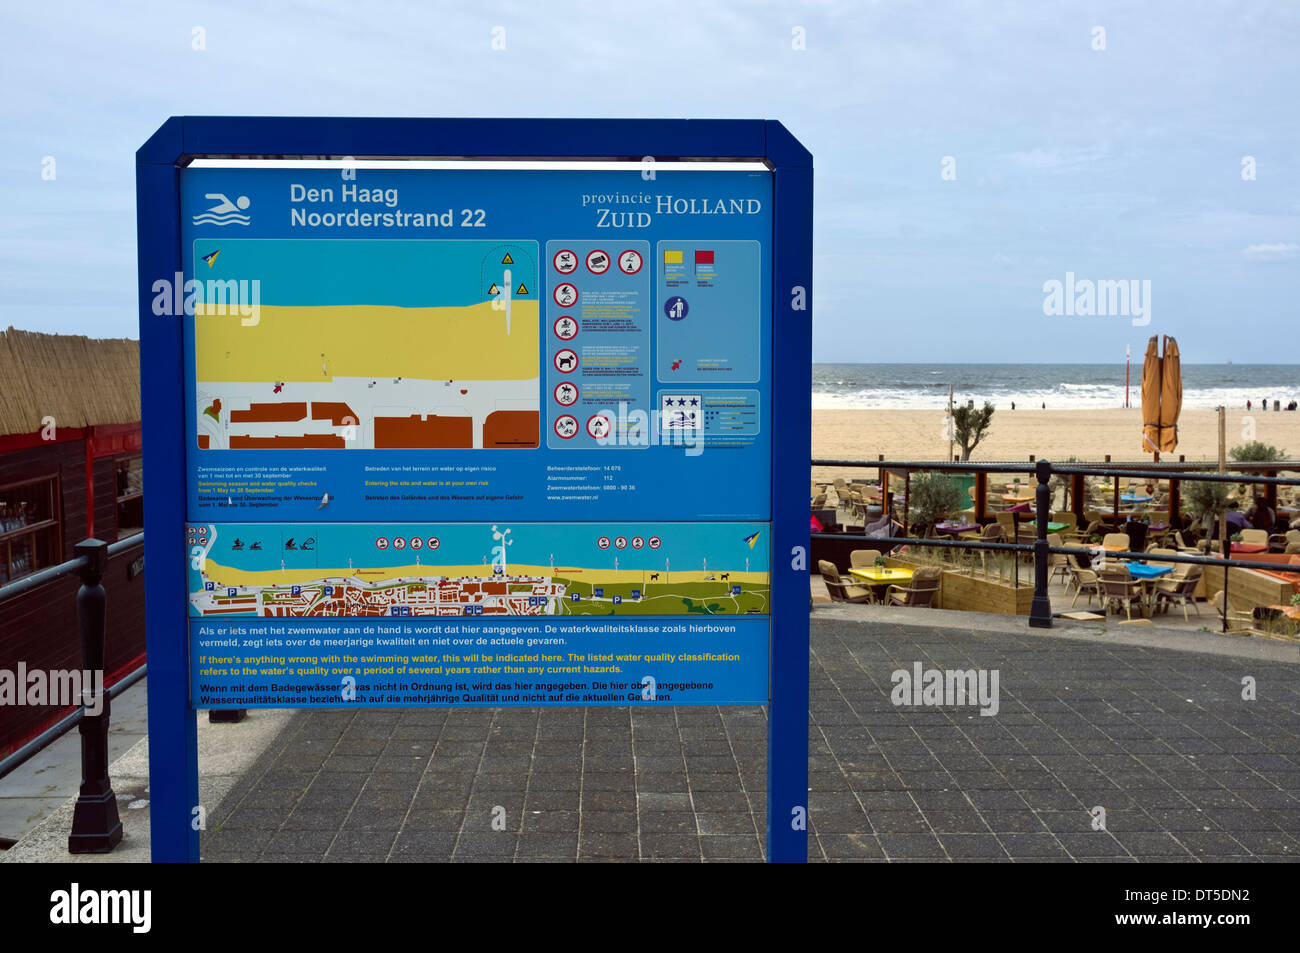 Noorderstrand beach information board and guide  the Hague (Den Haag) Netherlands (Nederland) Stock Photo